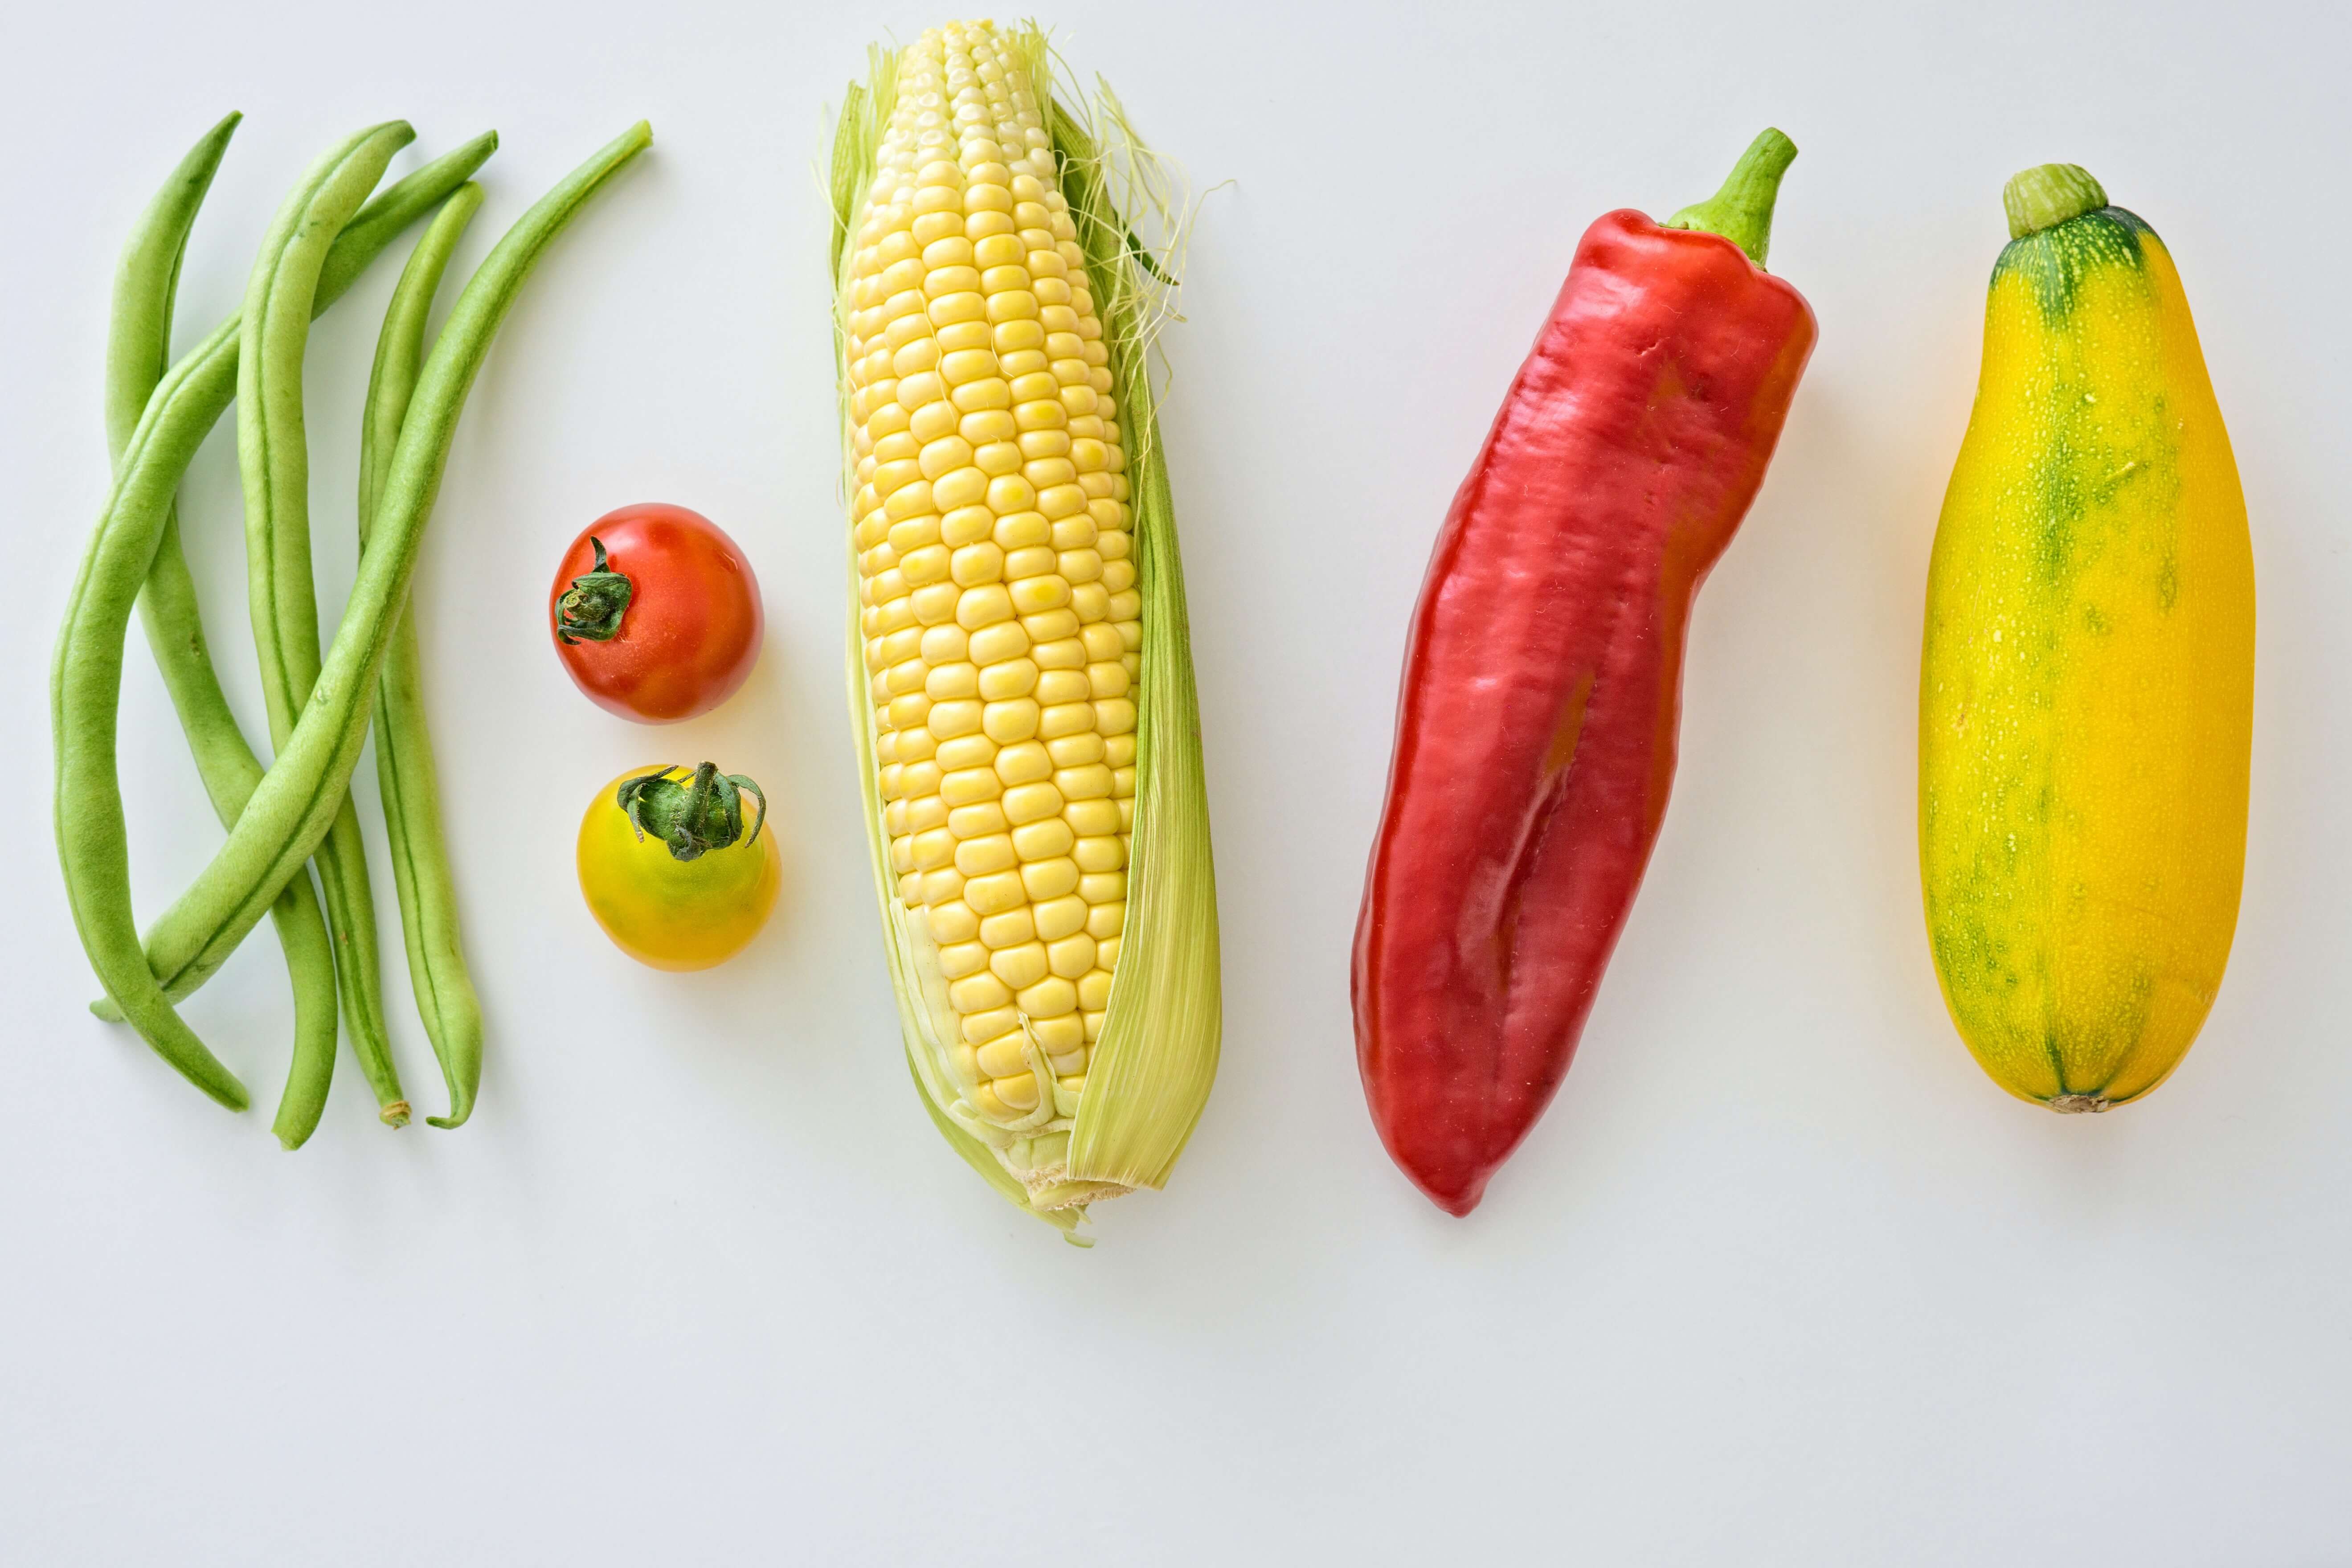 Bulk Seasoning Suppliers Discuss the Benefits of a Vegetarian Diet.